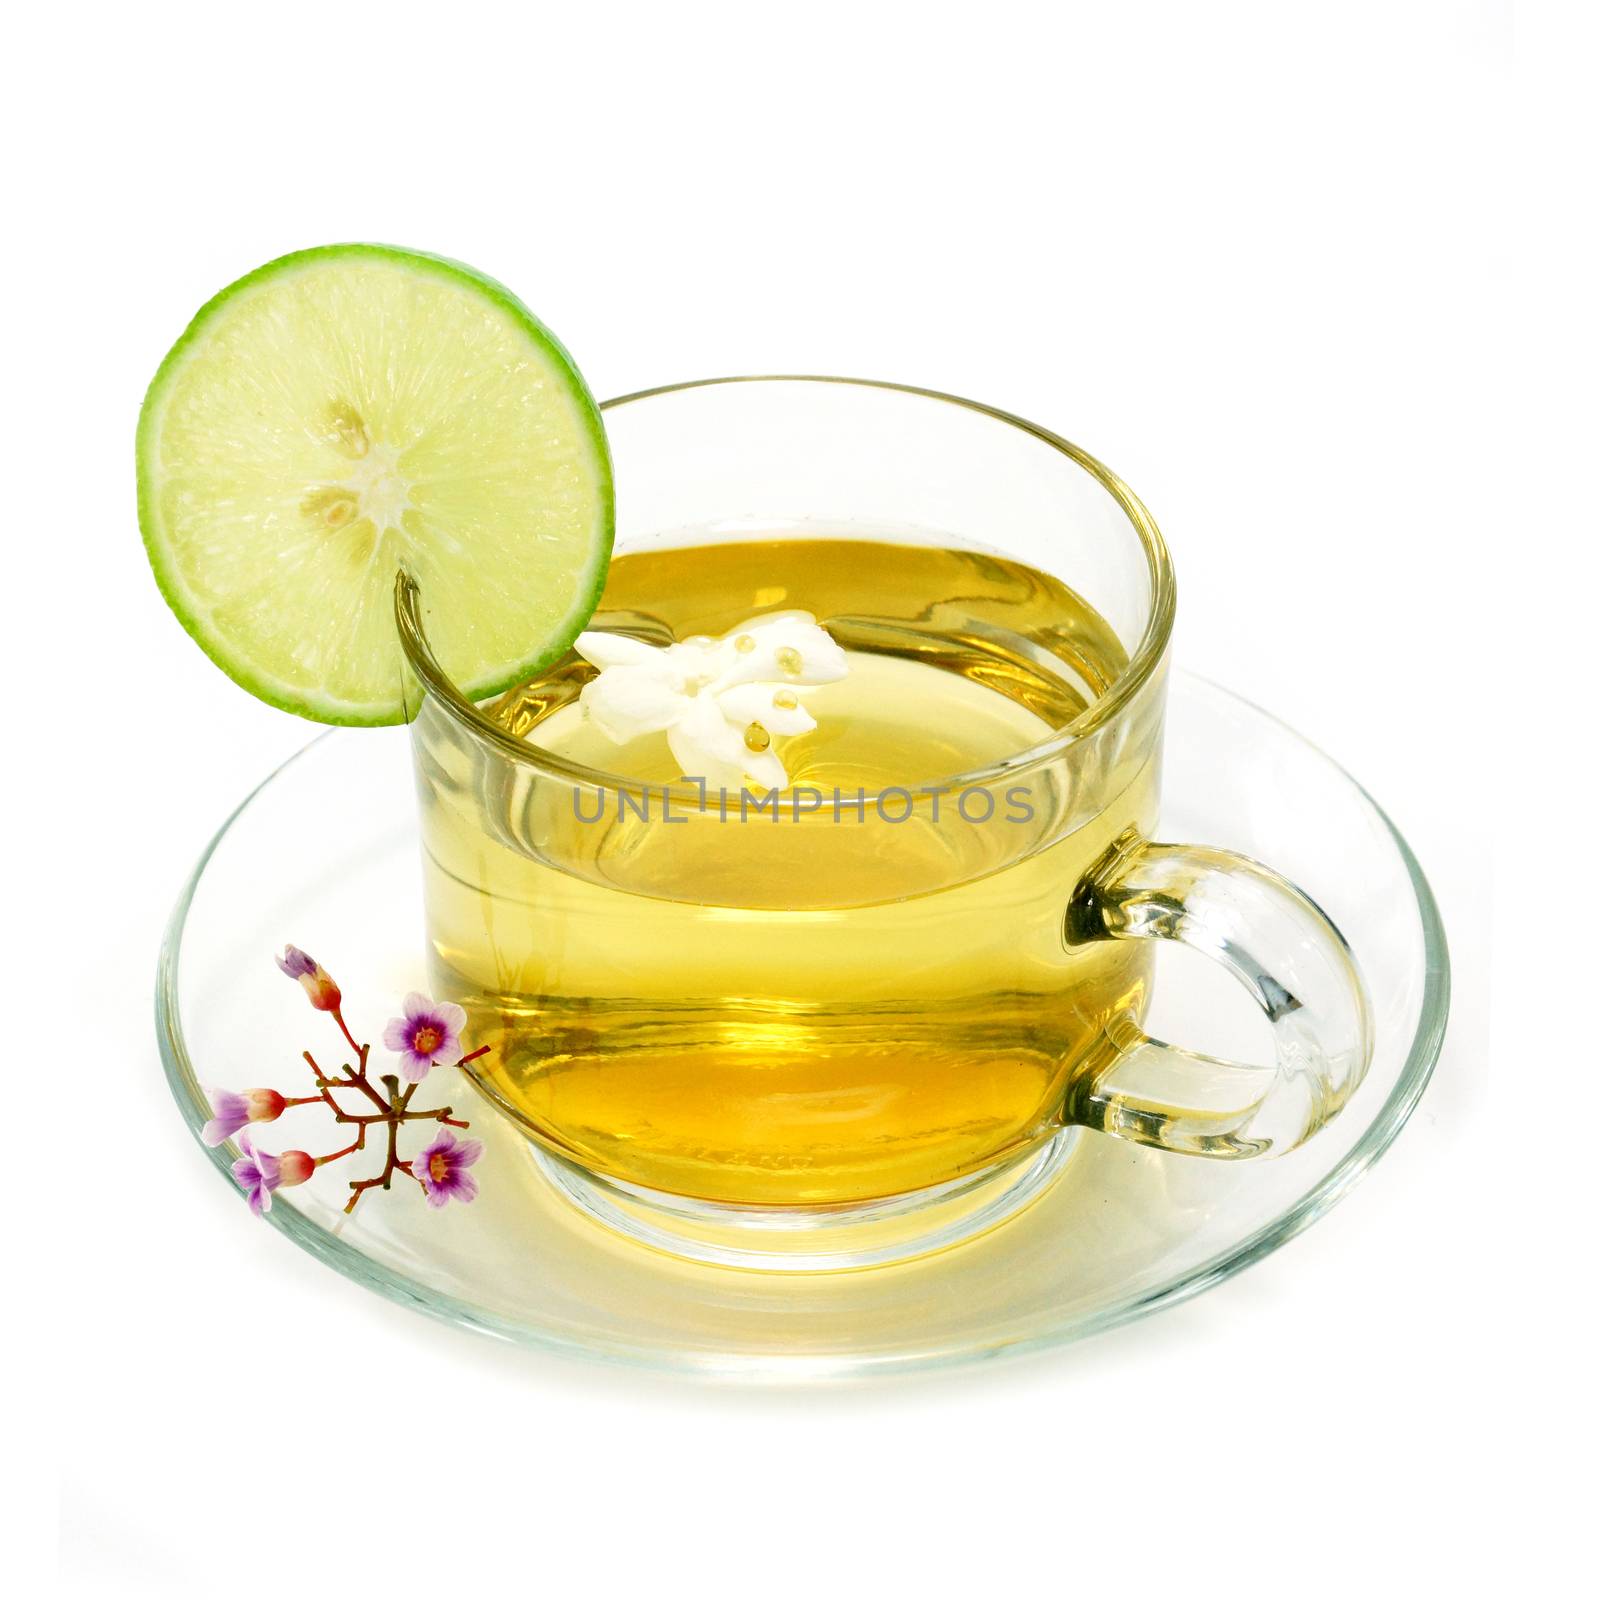 Flower tea mix honey and lemon. by Noppharat_th